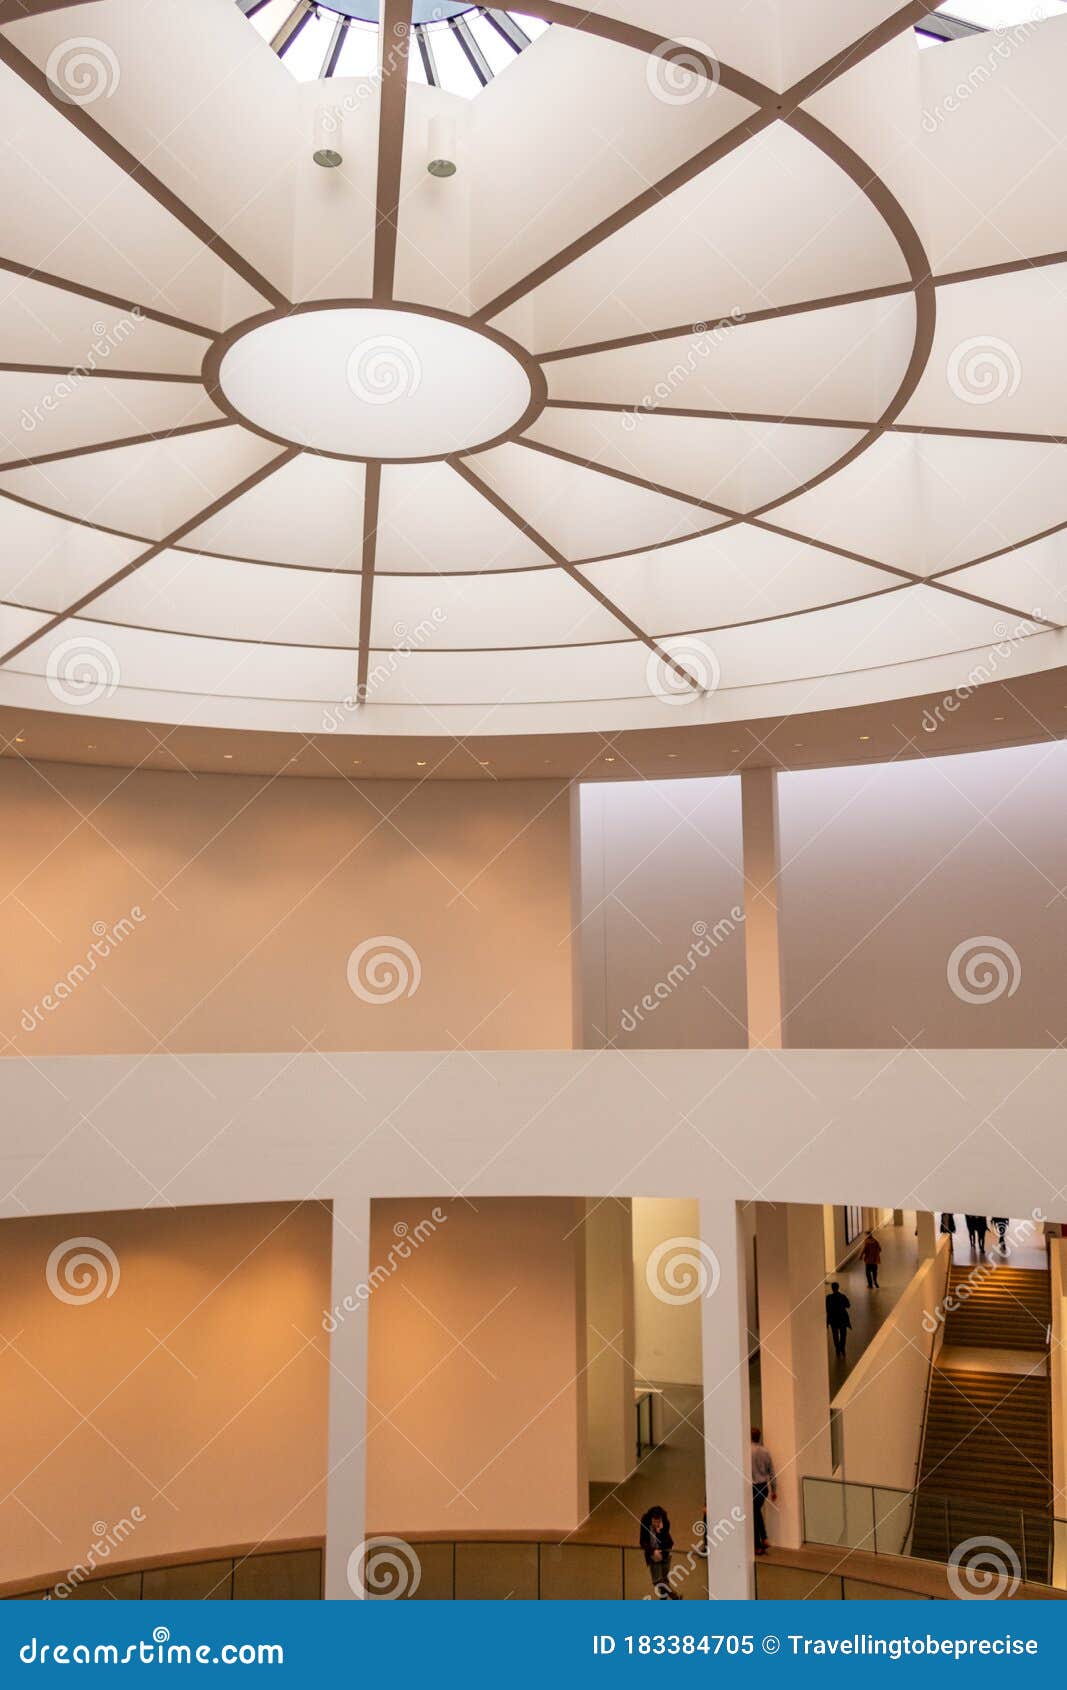 architectural detail: dome of pinakothek der moderne, munich, germany